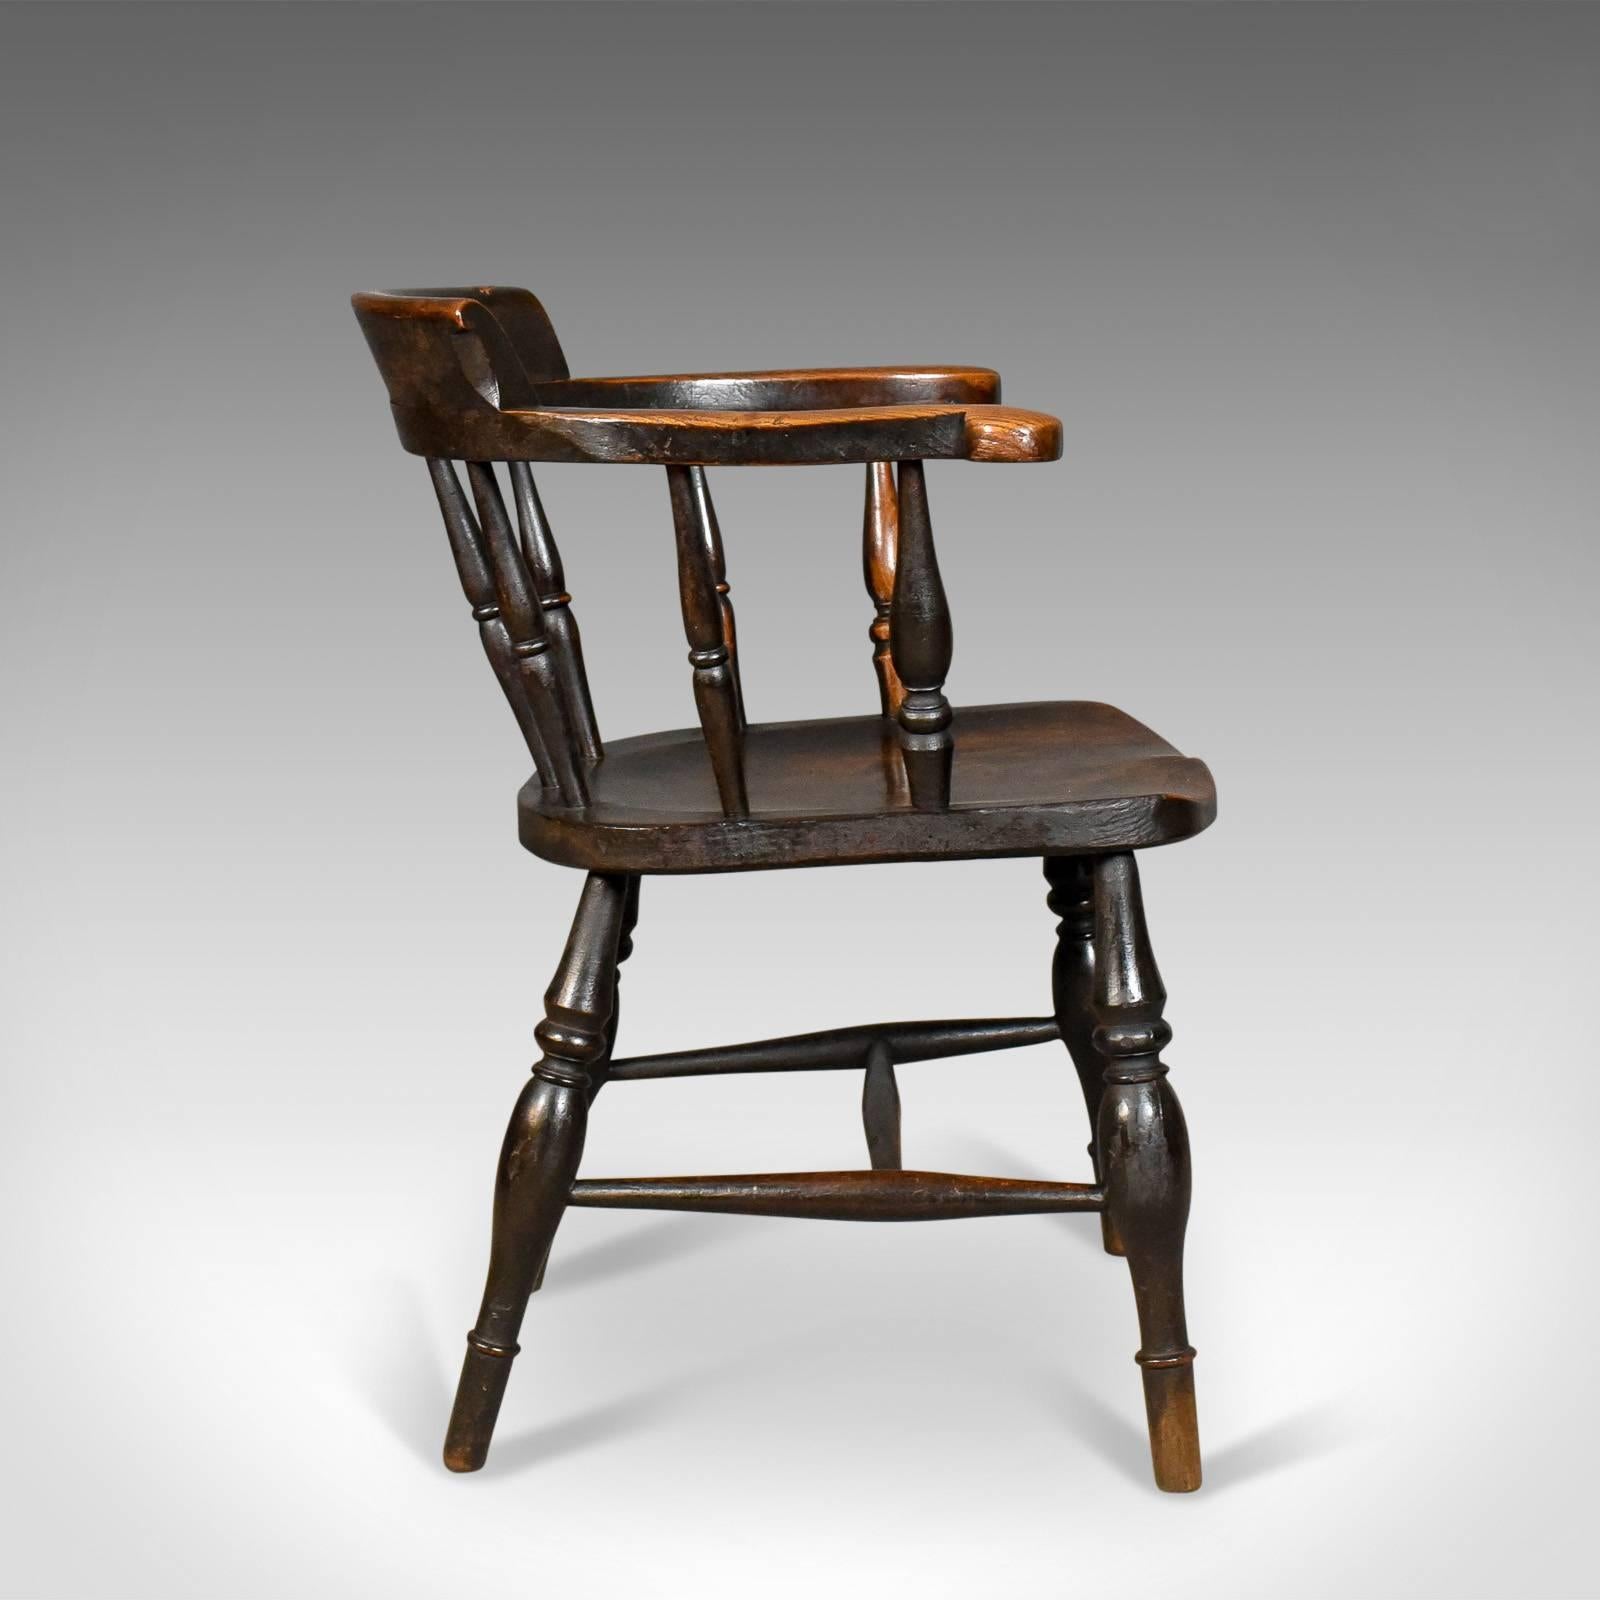 Antique Bow-Back Chair, English Victorian Elm Windsor, circa 1870 (Viktorianisch)